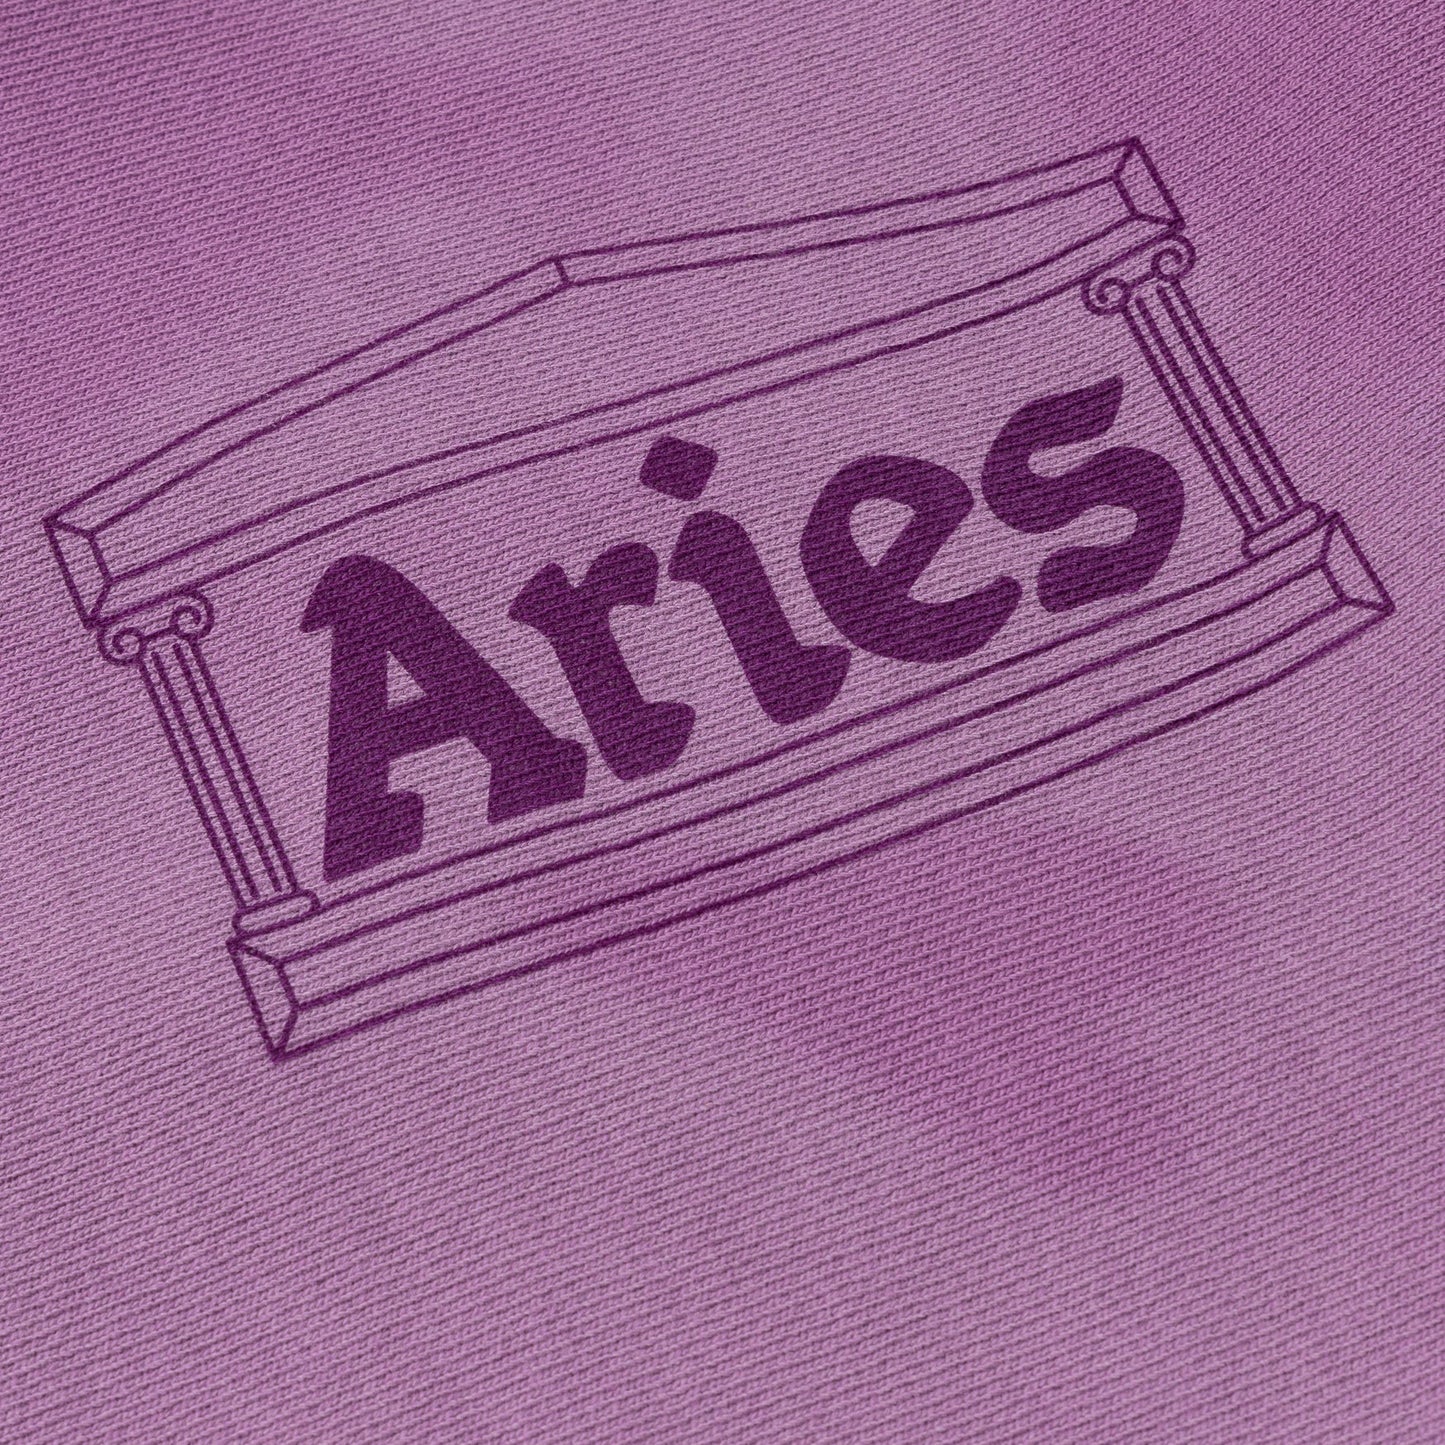 Aries Arise Sunbleached Cross Grain Temple Sweat